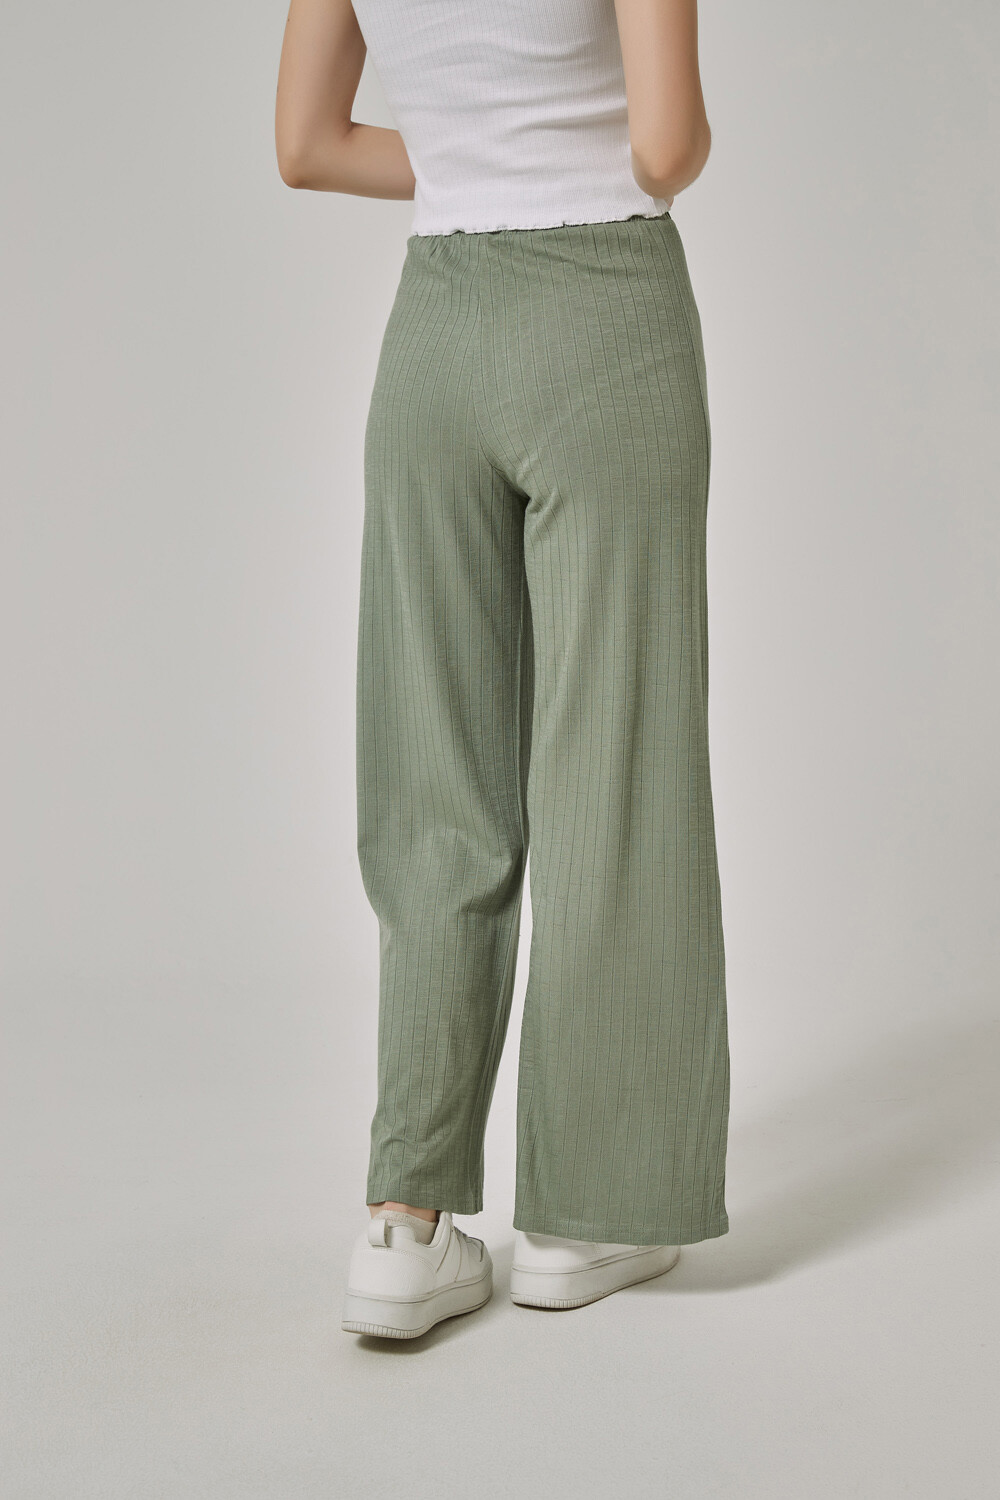 Pantalon Priego Verde Grisaceo